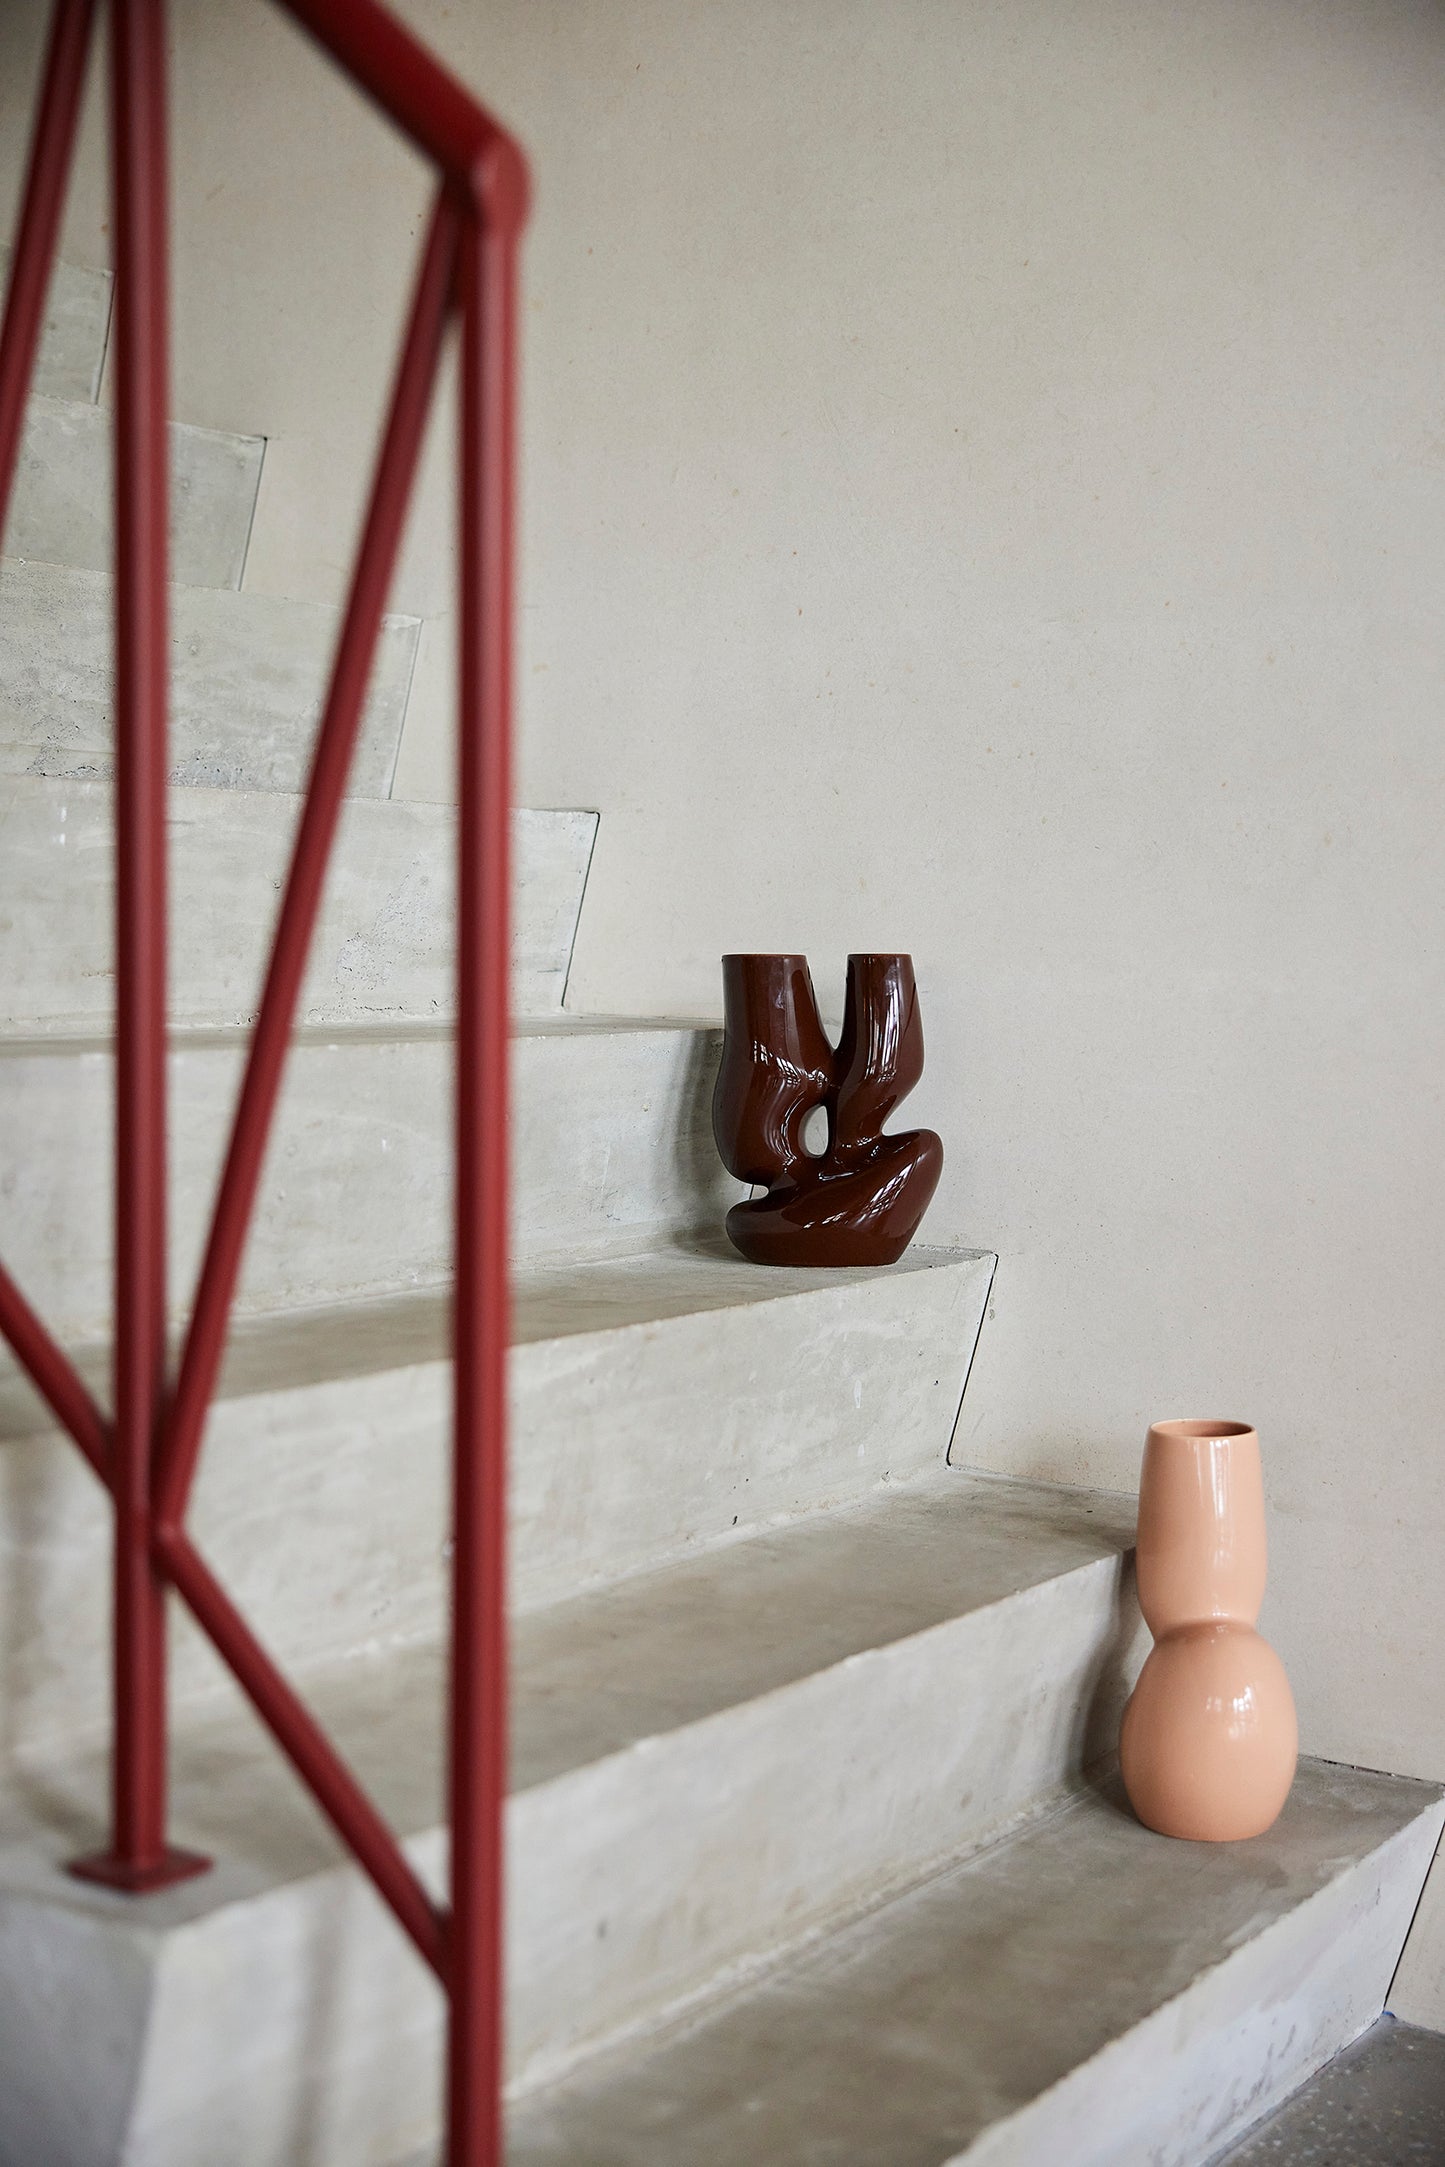 espresso brown organic shaped flower vase on concrete stairway